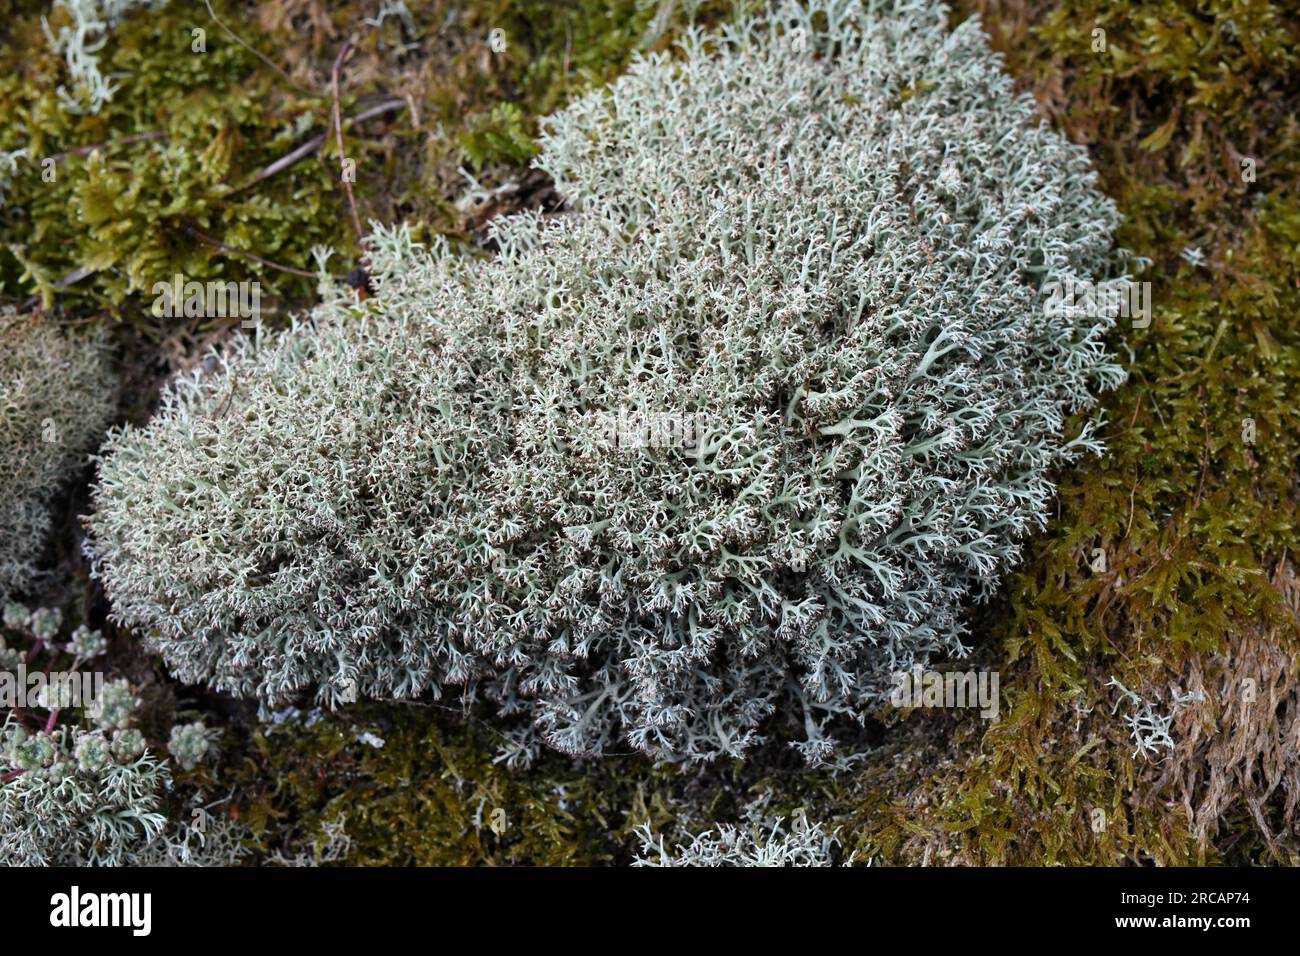 Cladonia arbuscula is a fruticose lichen. This photo was taken in Ínsua, Portgal. Stock Photo